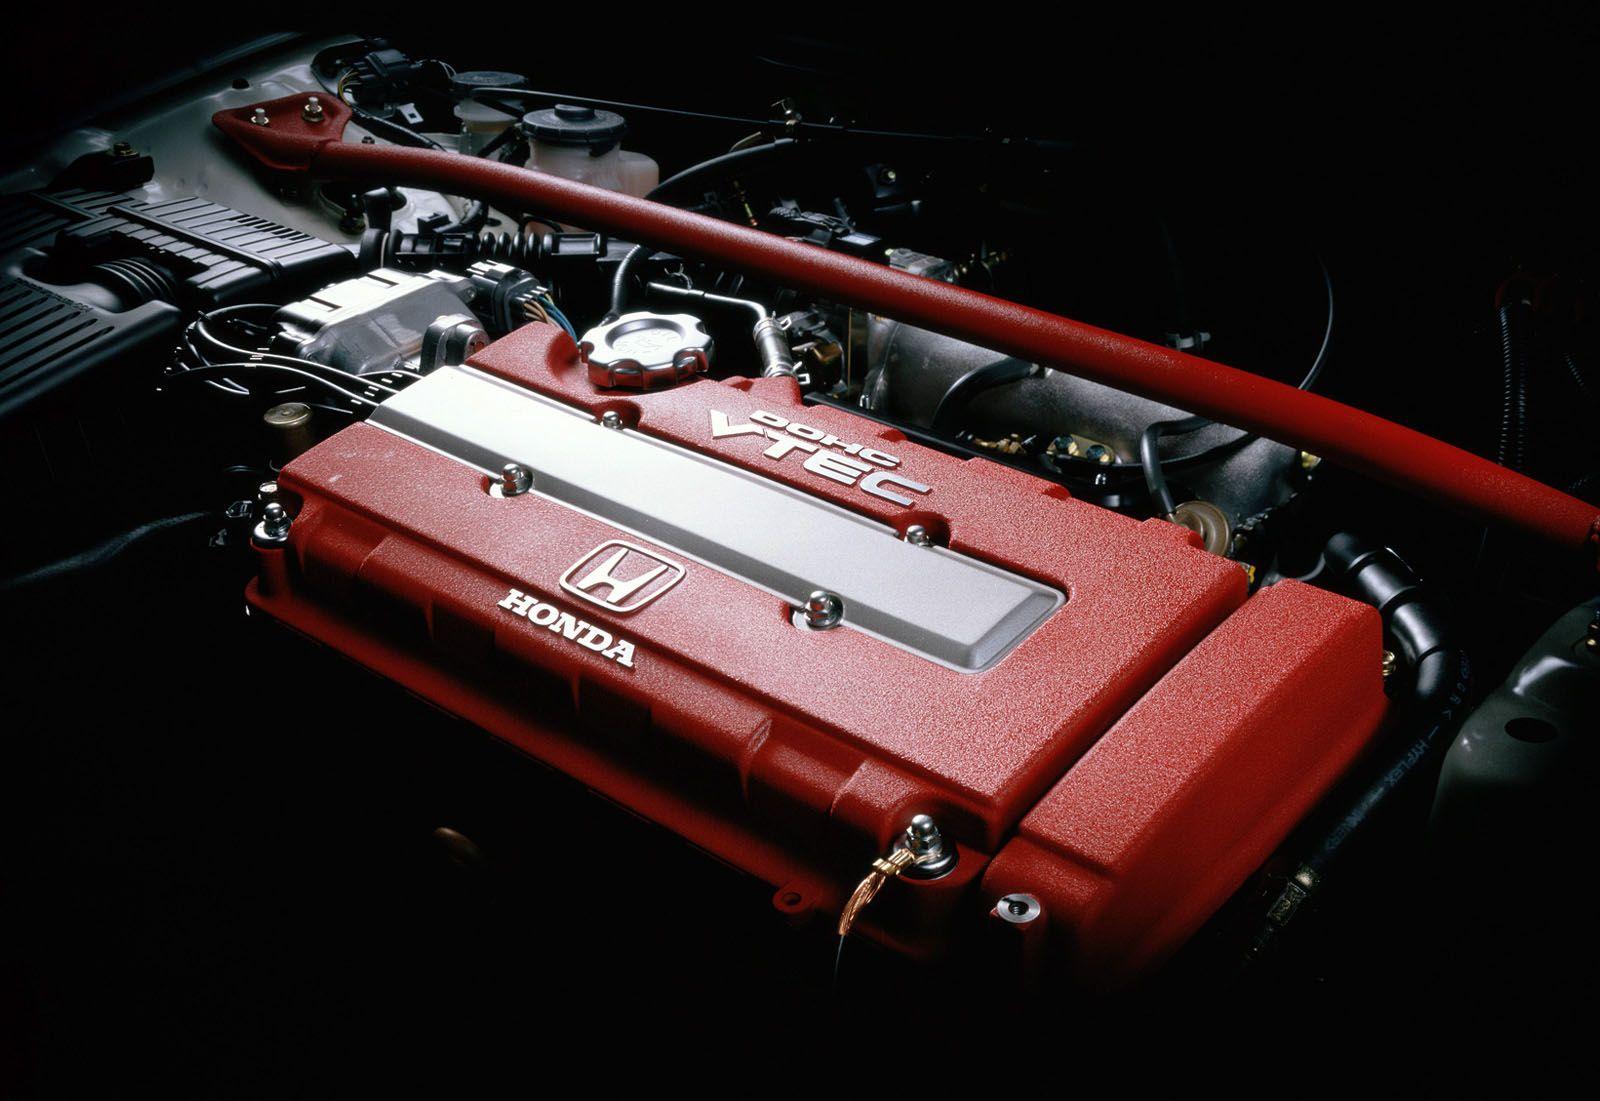 Honda B16 b series JDM motor. Check the number one JDM ONLY